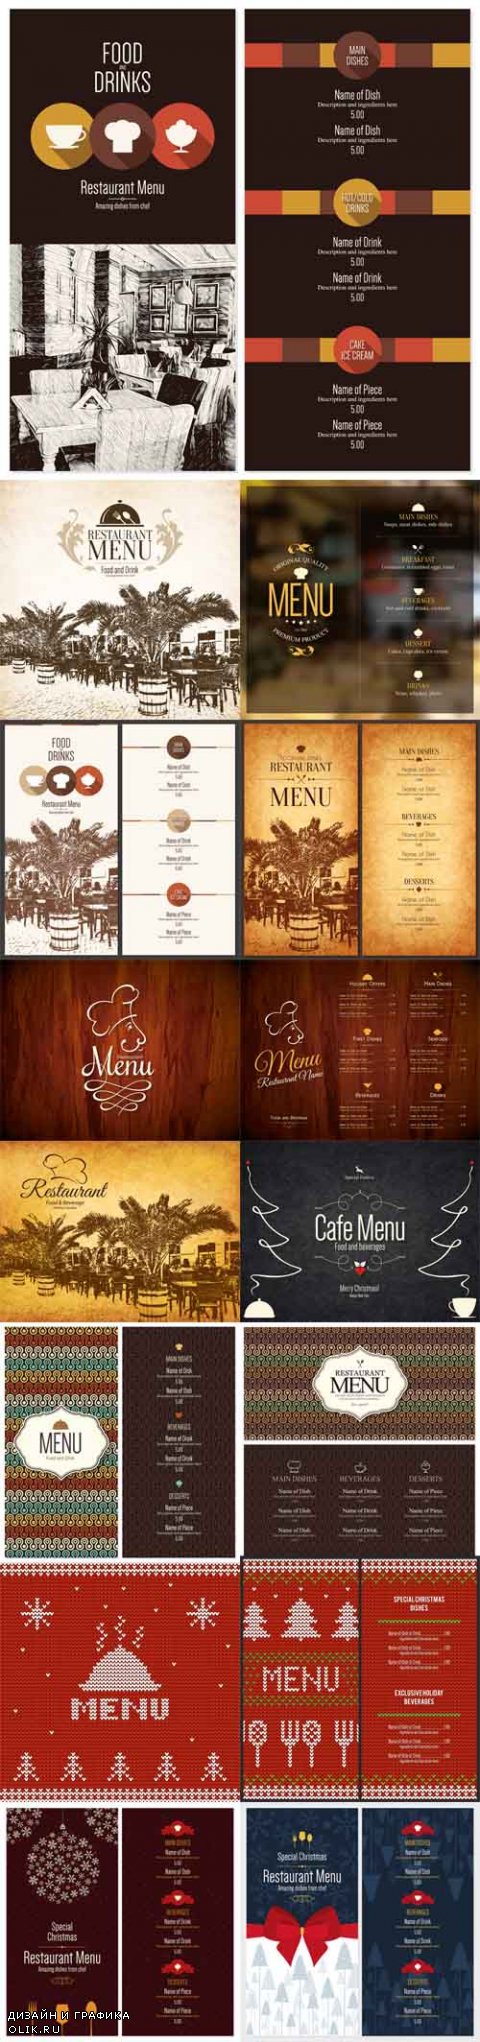 Vector Restaurant menu design, brochure template for cafe, coffee house, restaurant, bar